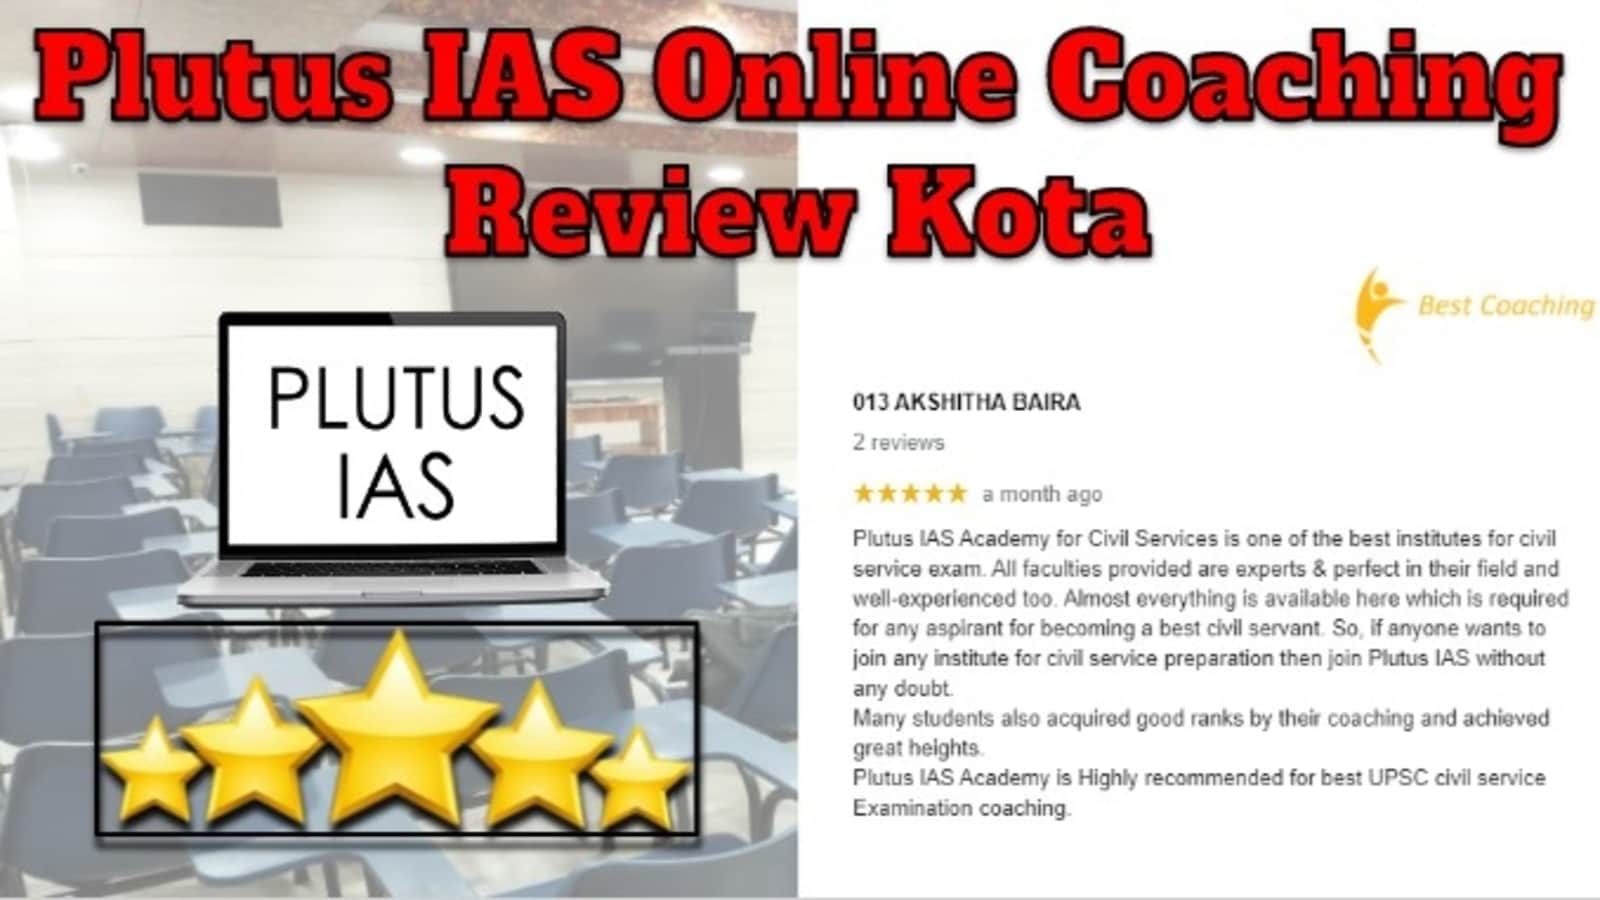 Plutus IAS Online Coaching Review Kota